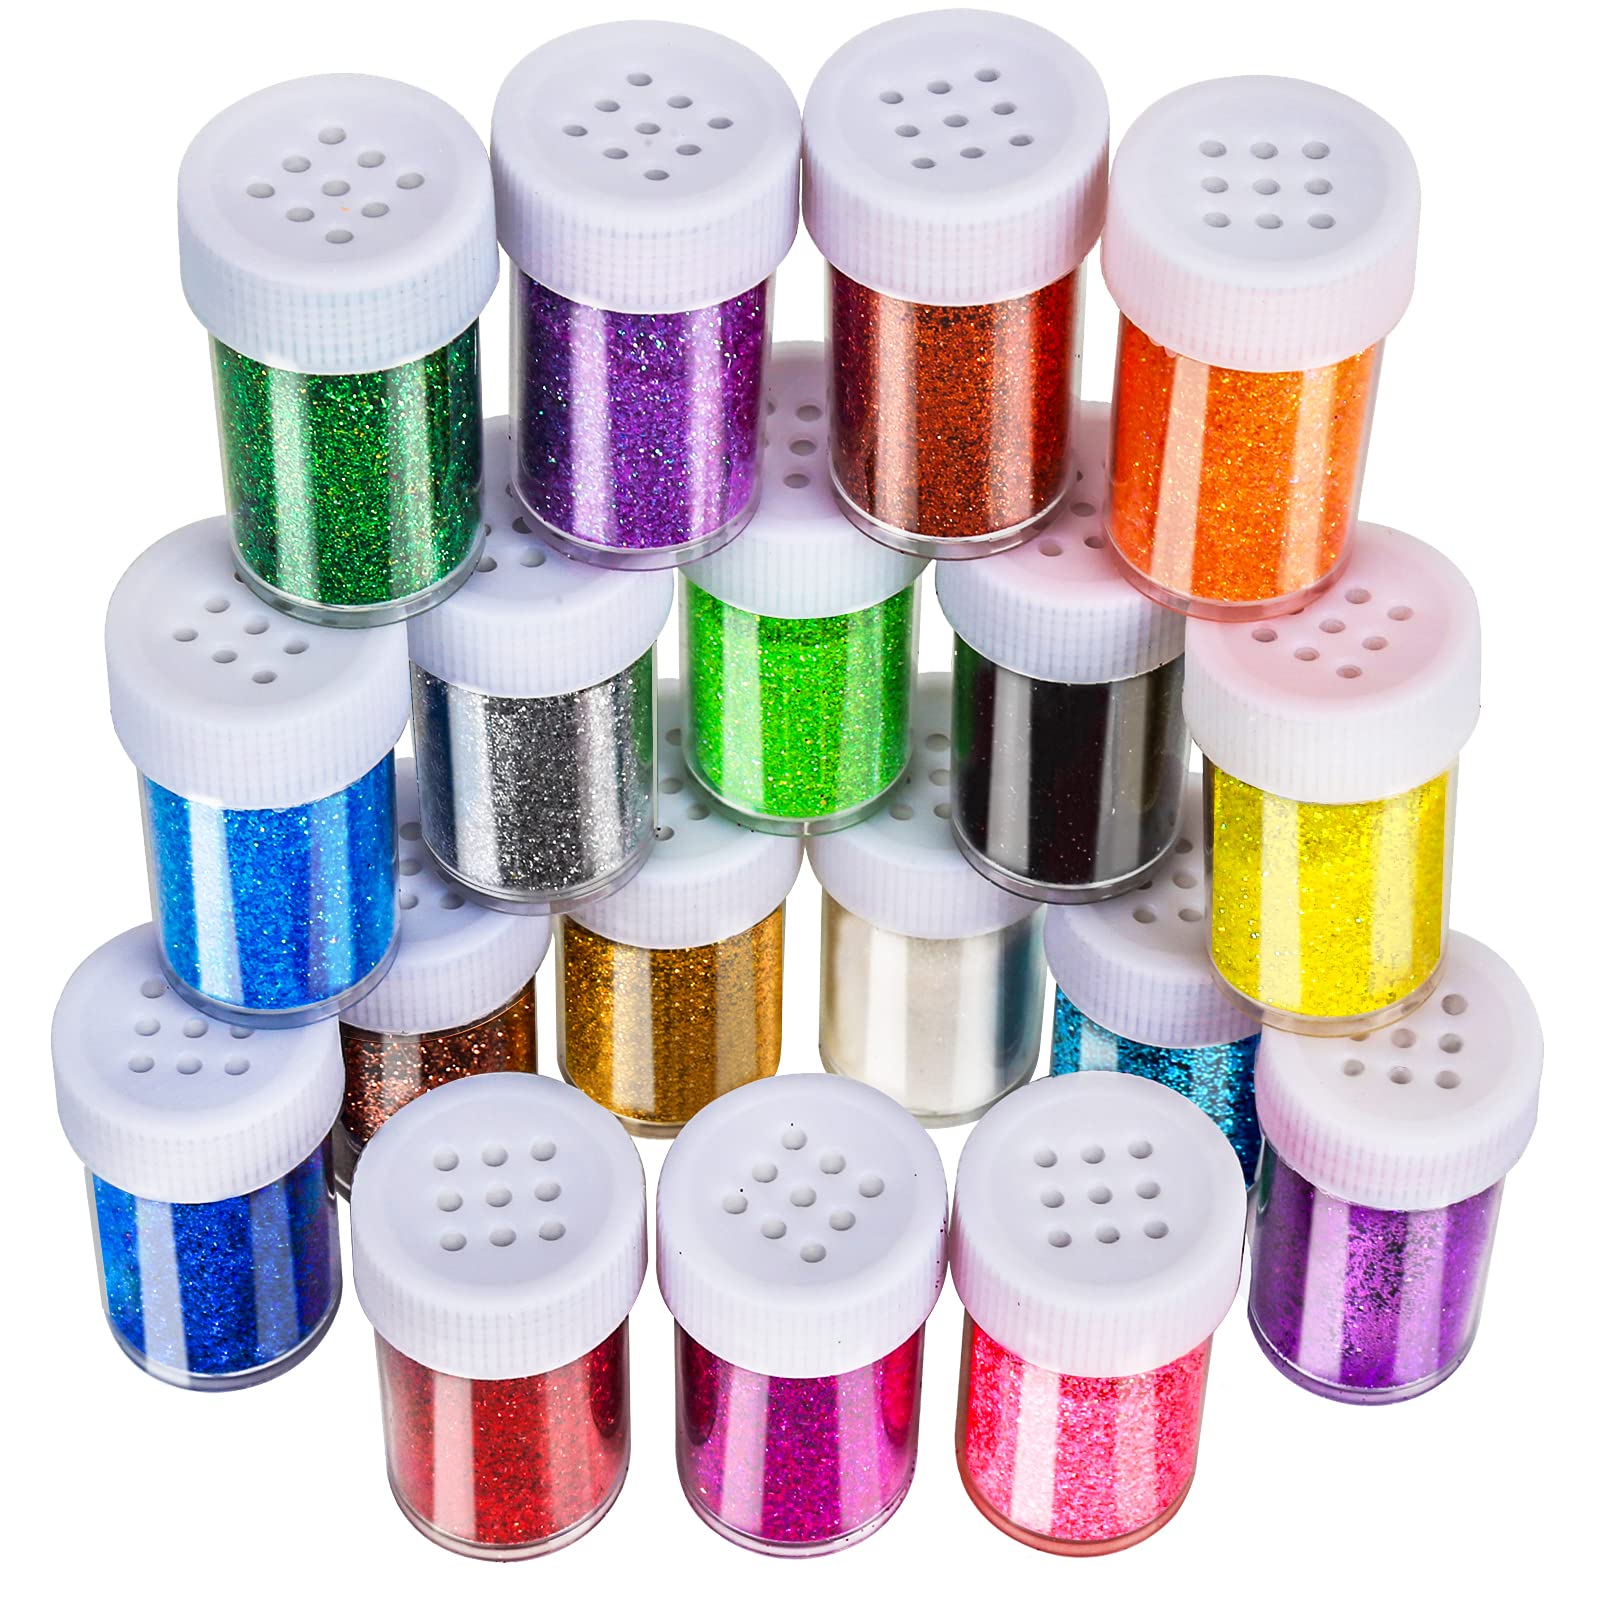  LEOBRO Glitter, 41PCS Resin Supplies Kit, Extra Fine Glitter  for Resin, Resin Glitter Flakes Sequins, Foil Flakes, Craft Glitter for  Resin Crafts, Nail Art, Jewelry Tumbler Making : Arts, Crafts 